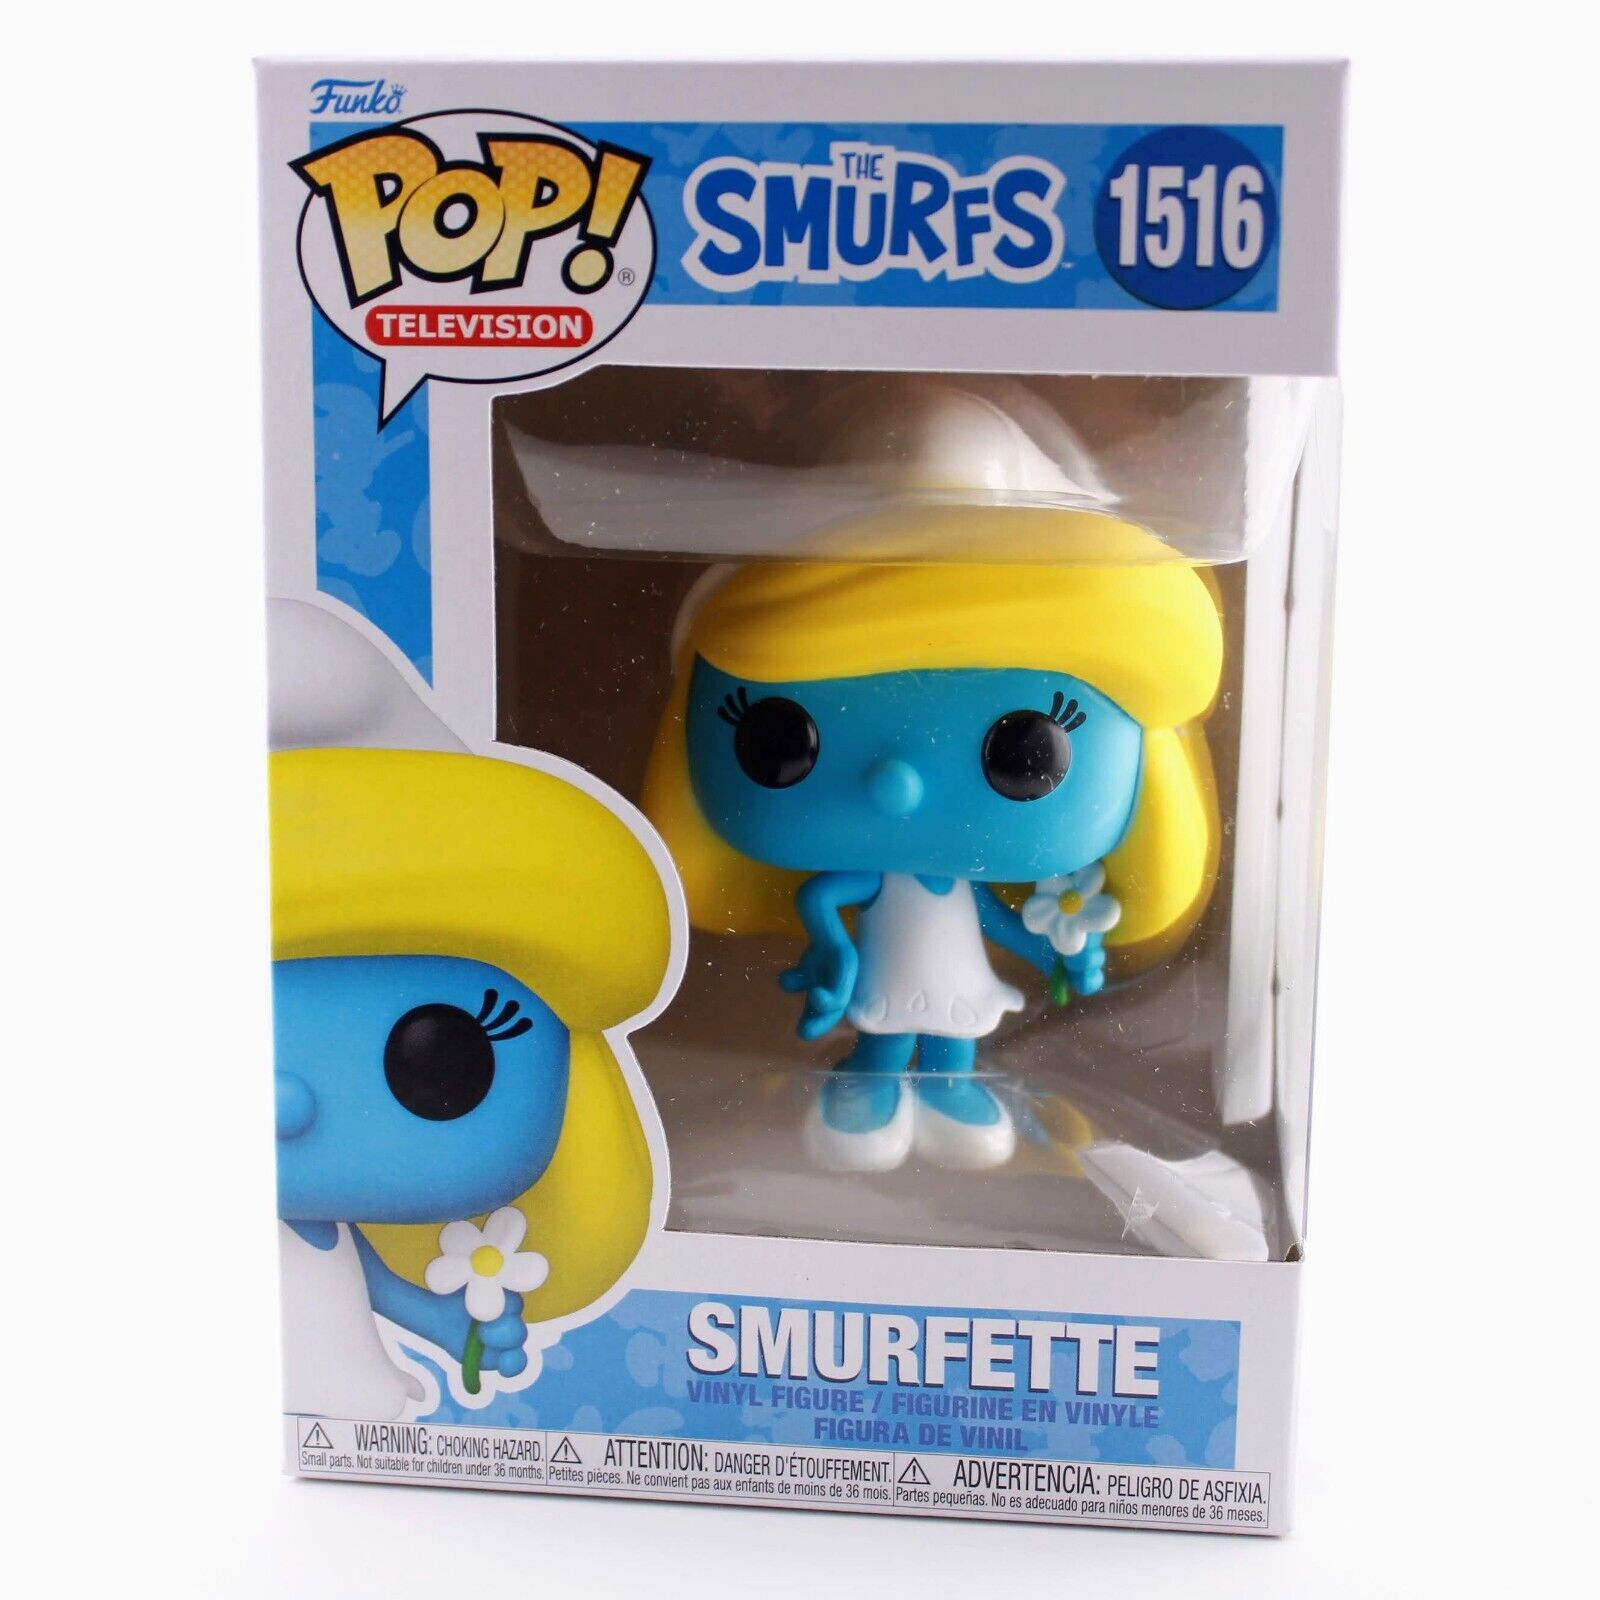 Funko Pop Television The Smurfs - Smurfette Vinyl Figure #1516